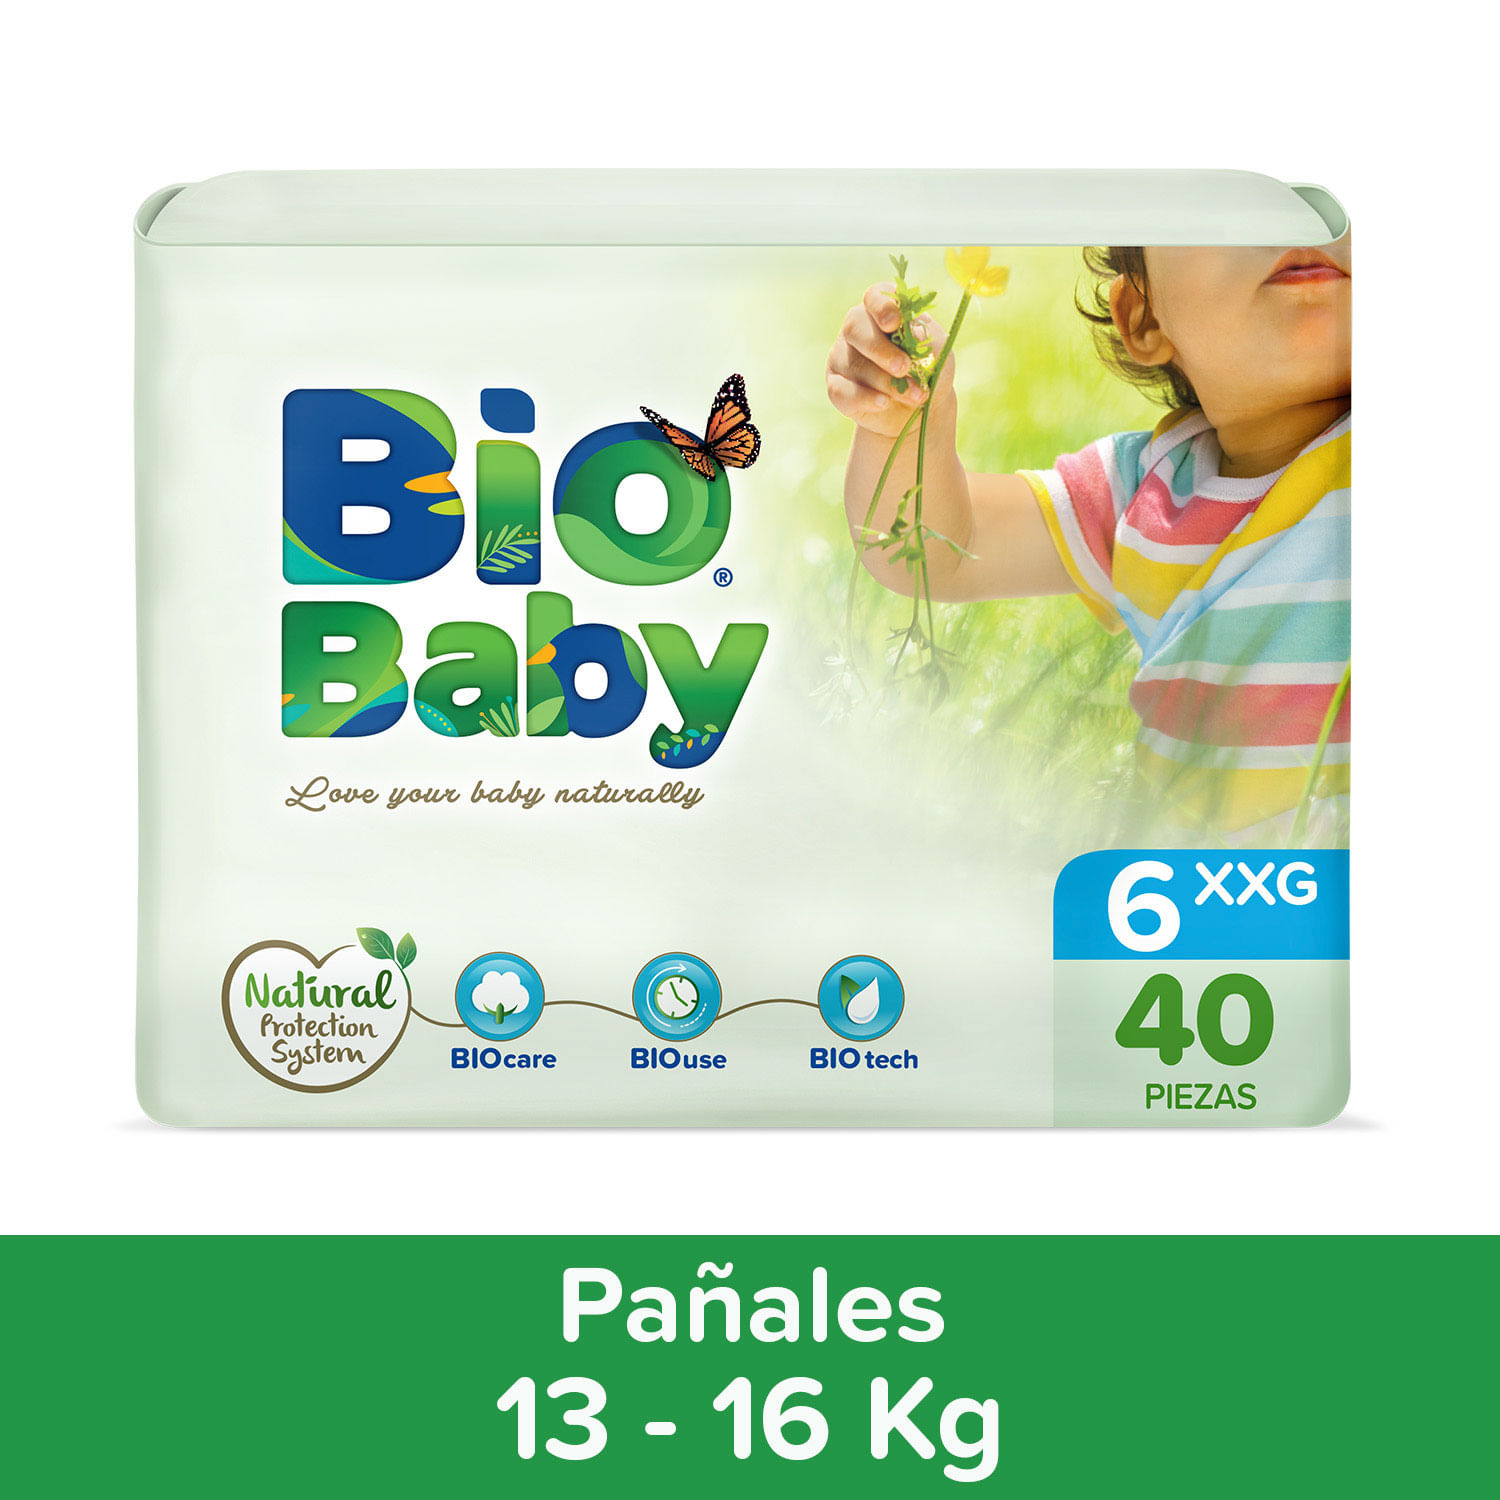 zona obesidad Conveniente Pañales Bio Baby Ecológicos Talla XXG 40 un. | Jumbo.cl